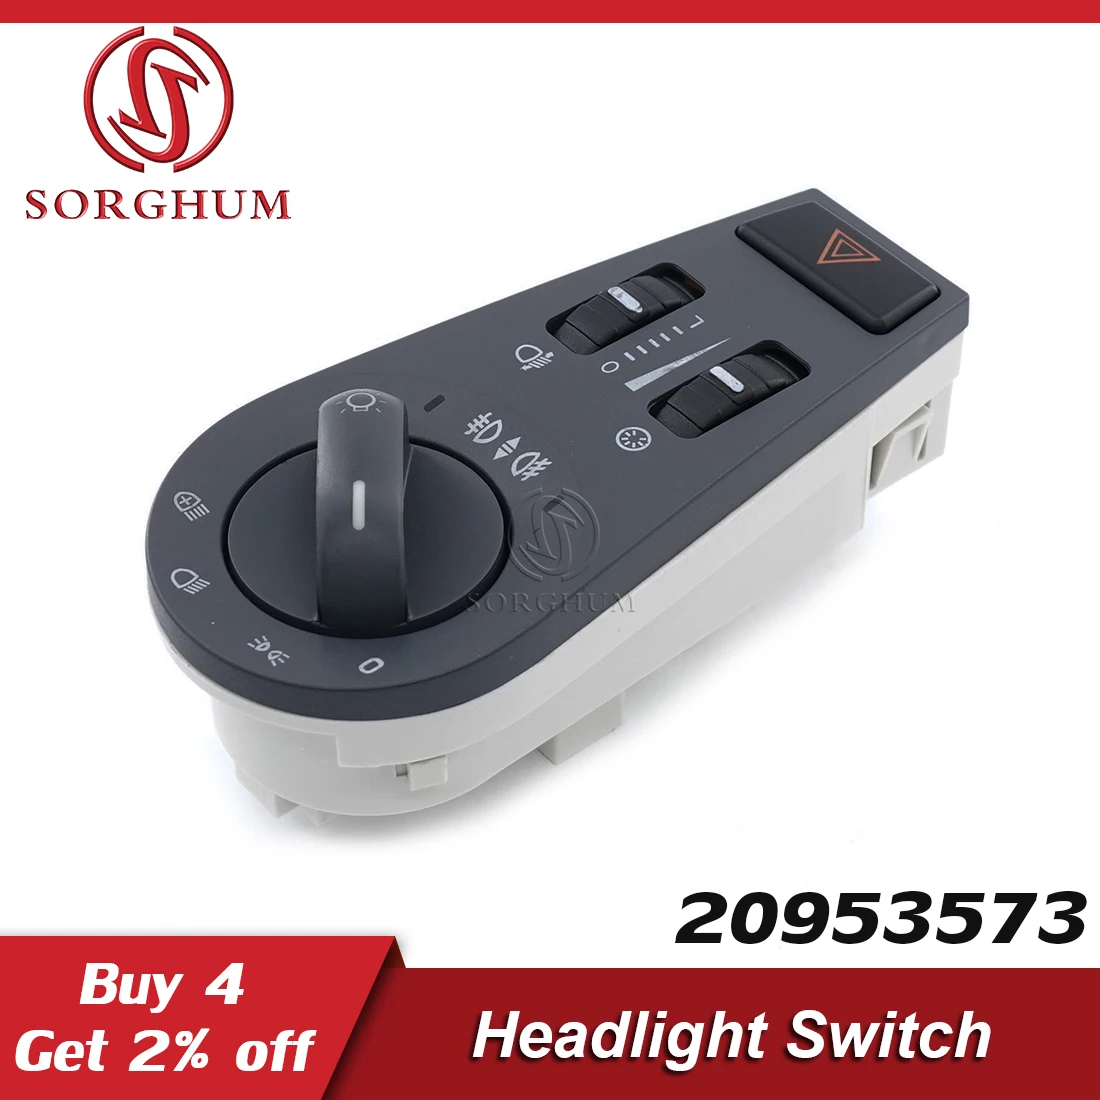 

Sorghum 20953573 Headlight Control Fog Lamp Hazard Warning Light Switch For Volvo FH FM 20942846 20466304 Truck Accessories